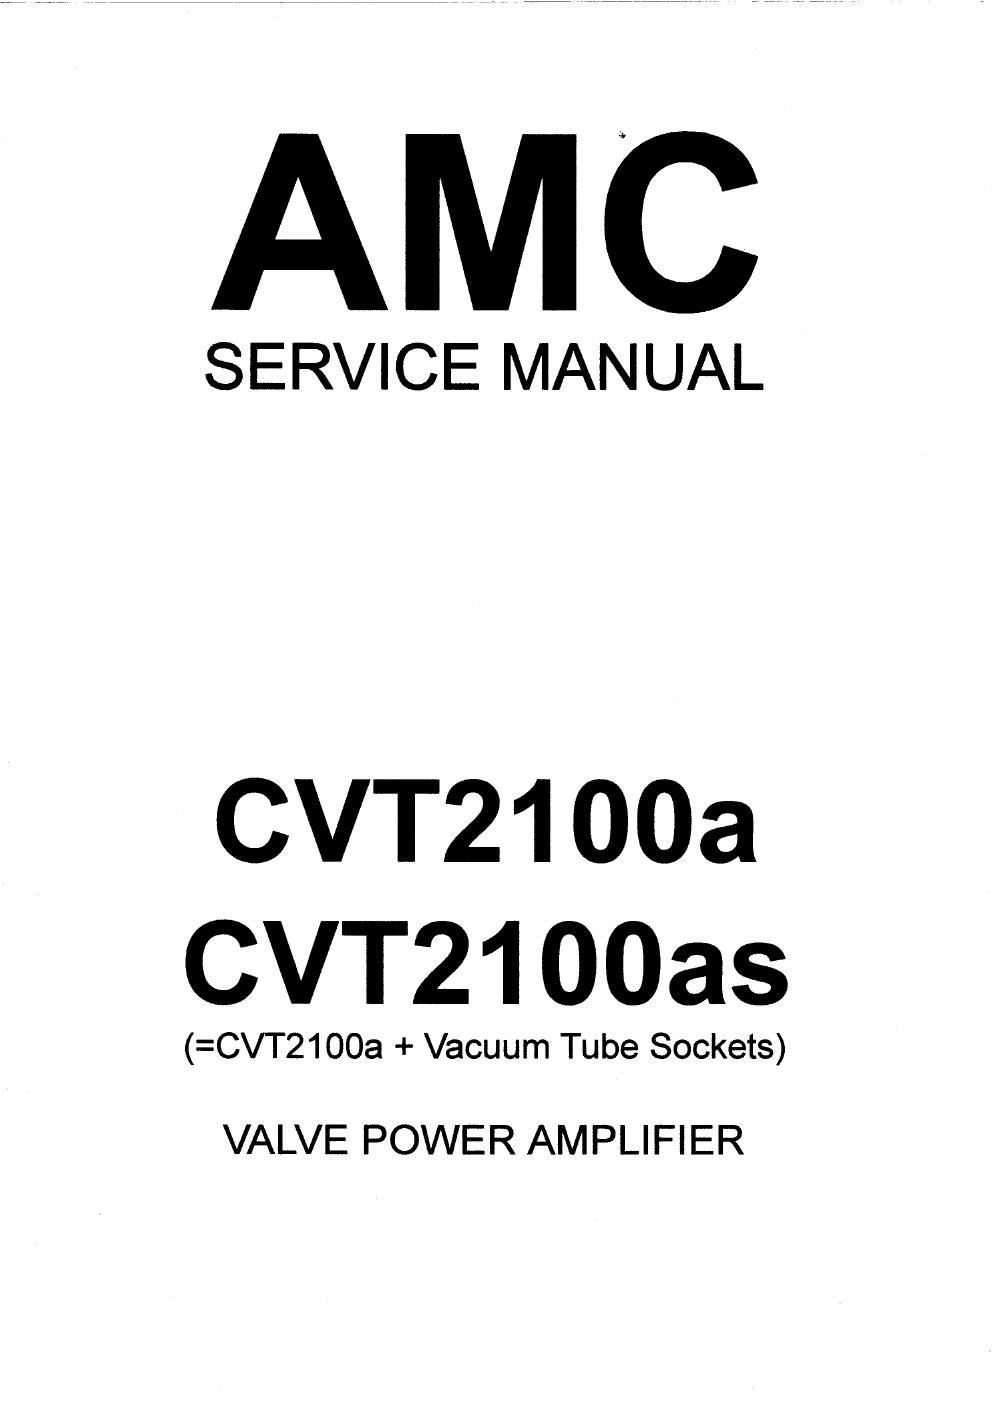 Amc cvt 2100A pwr service manual